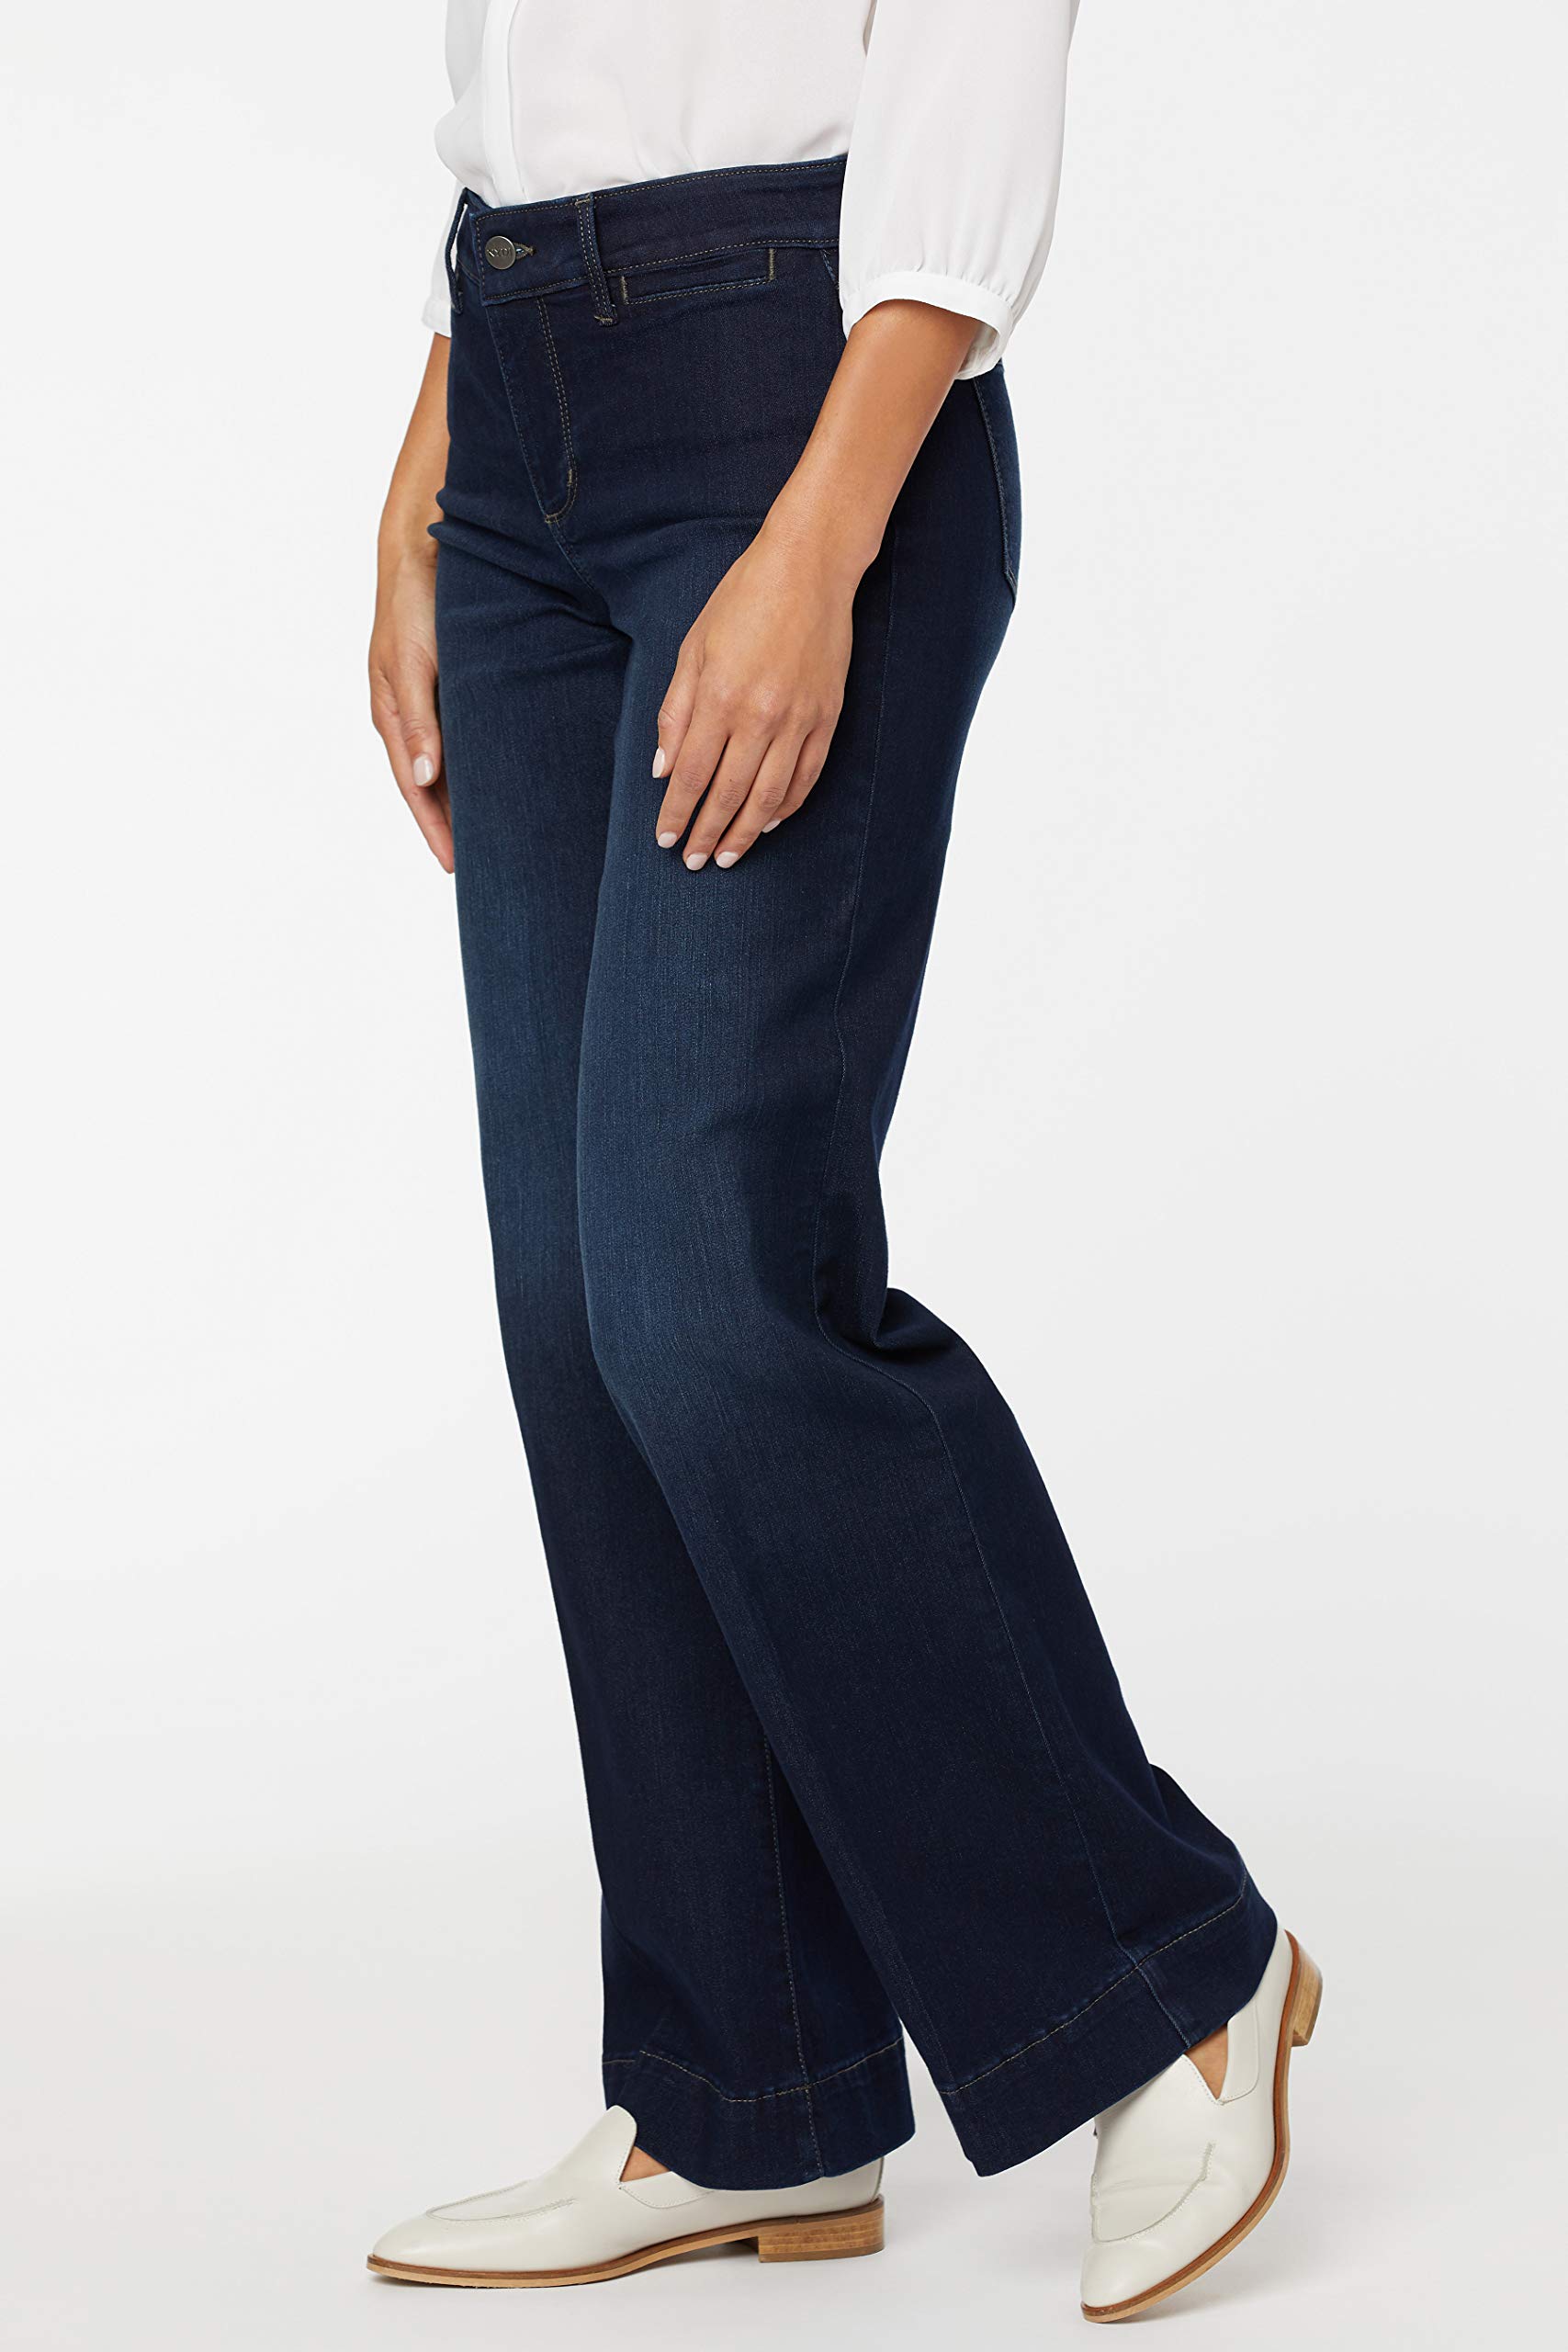 NYDJ Women's Teresa Trouser Jeans-Premium Denim